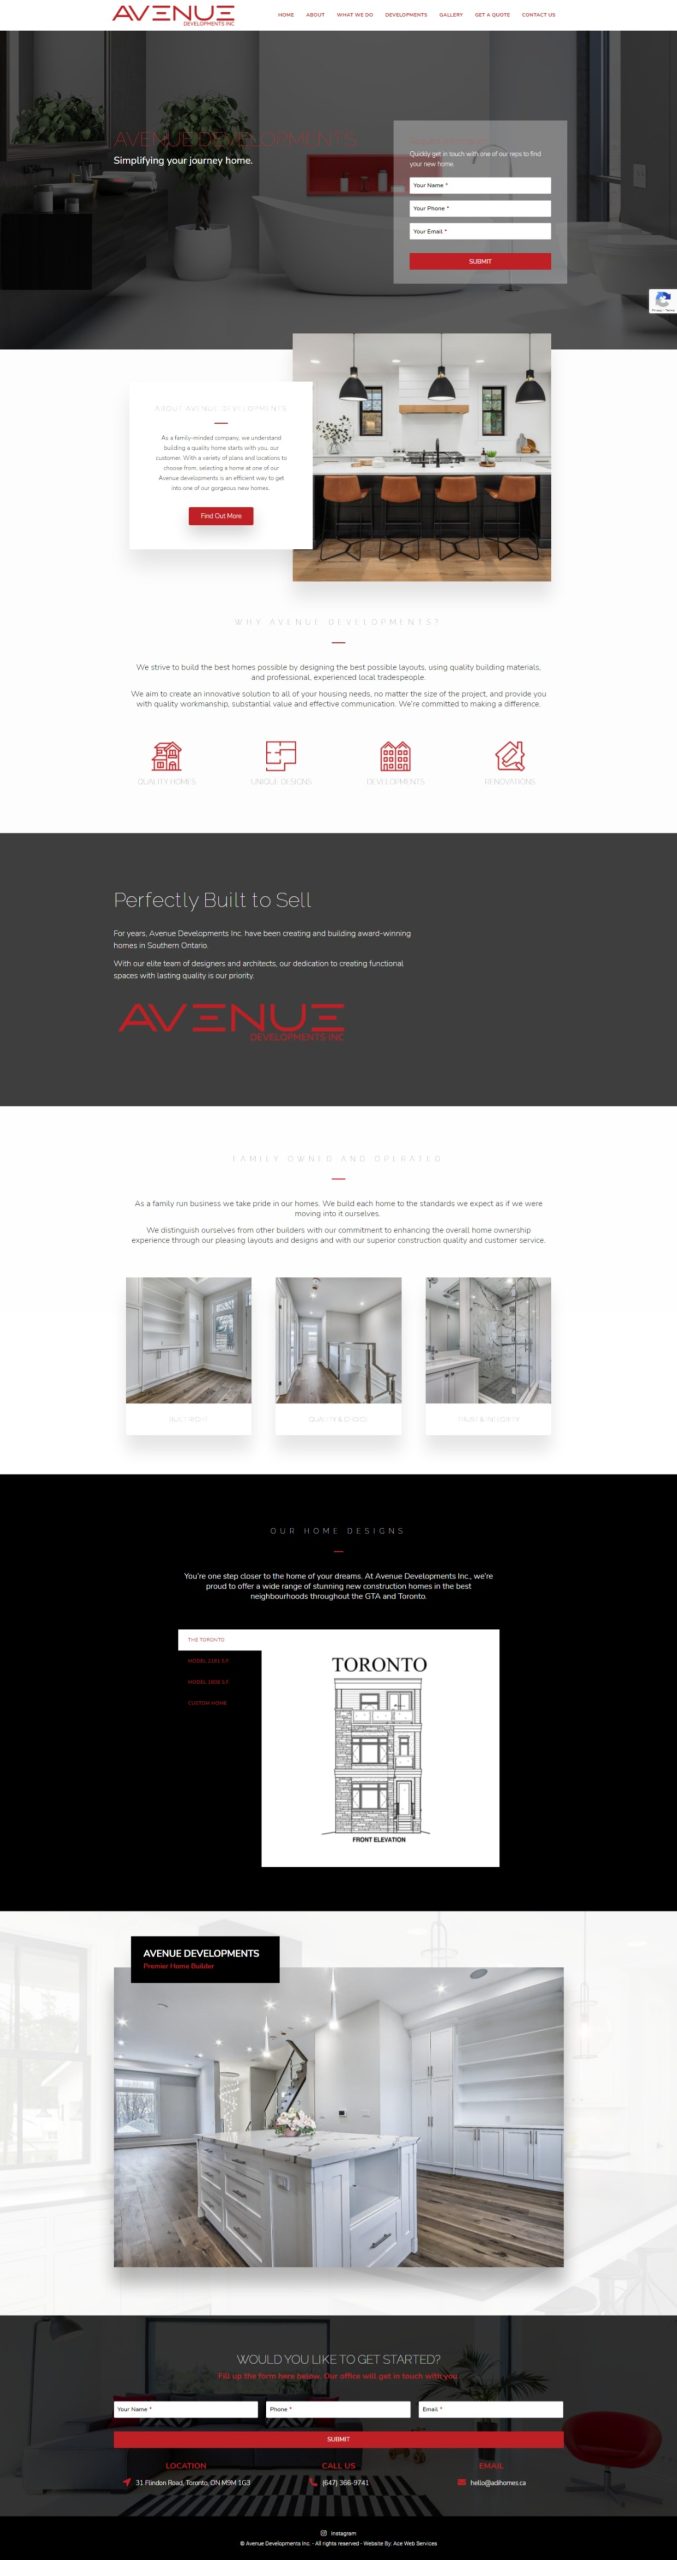 Avenue Developments Inc.